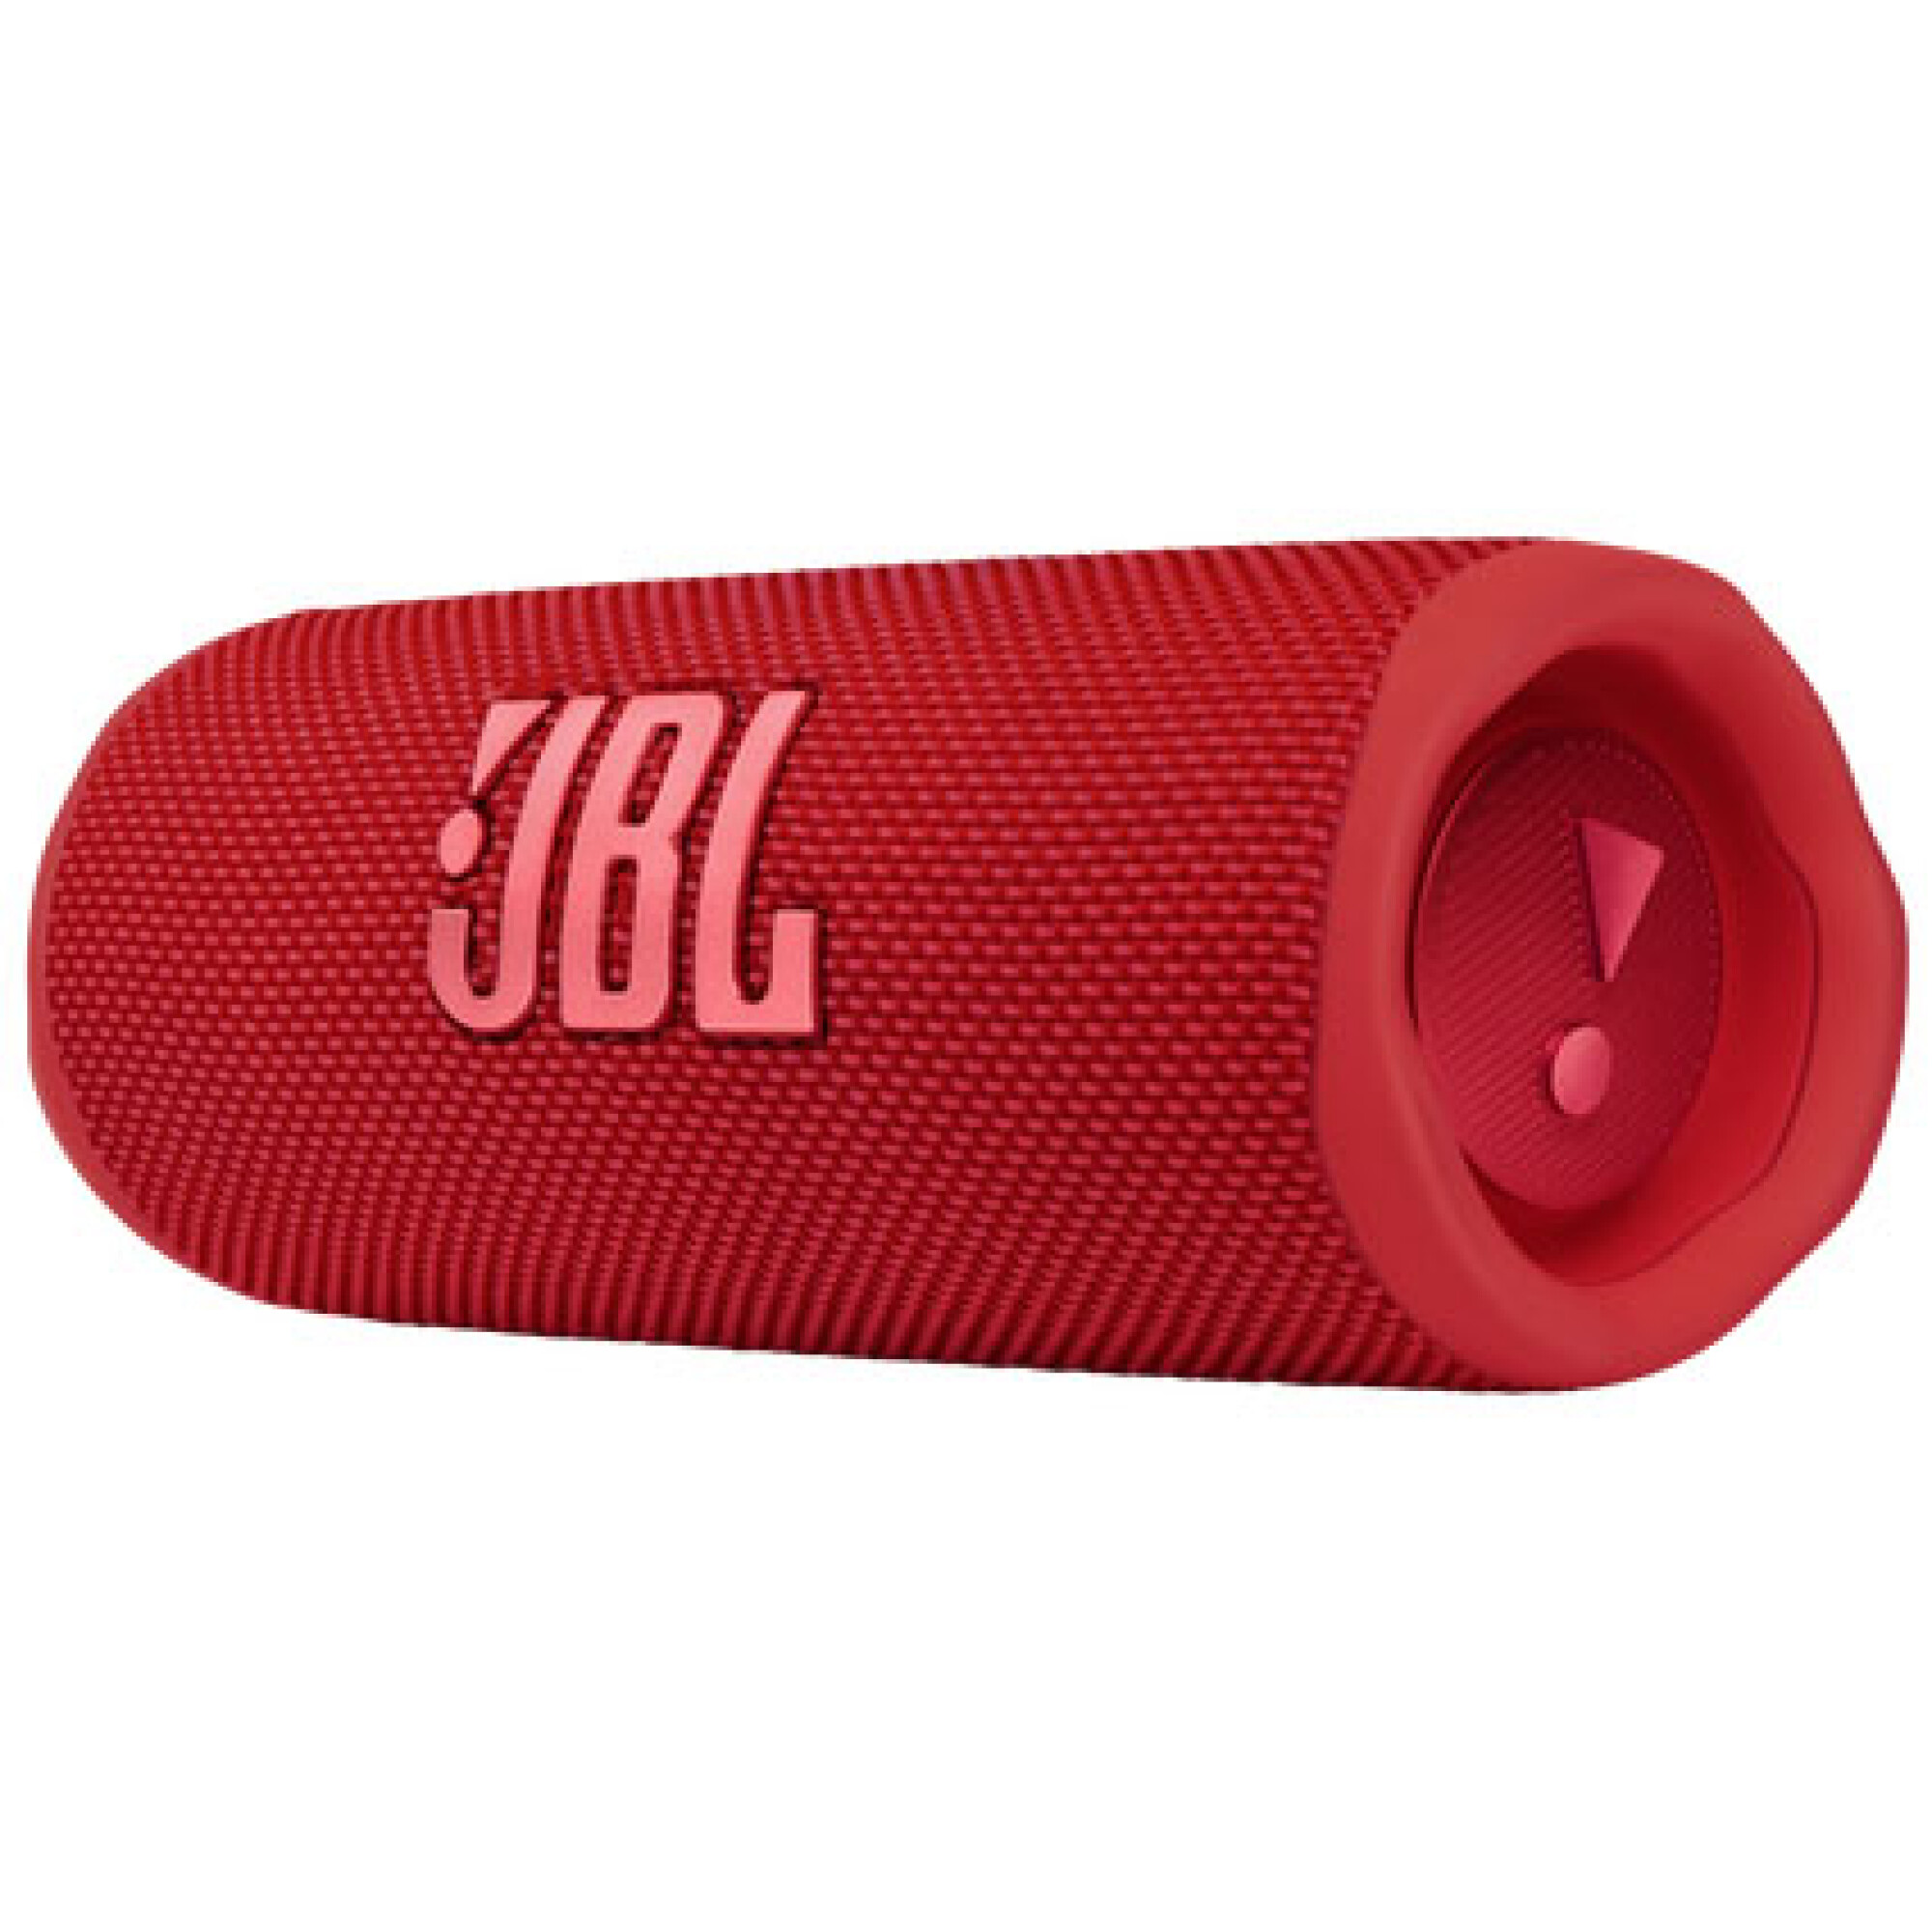 Parlante Portatil JBL Flip 6 Bluetooth Teal.